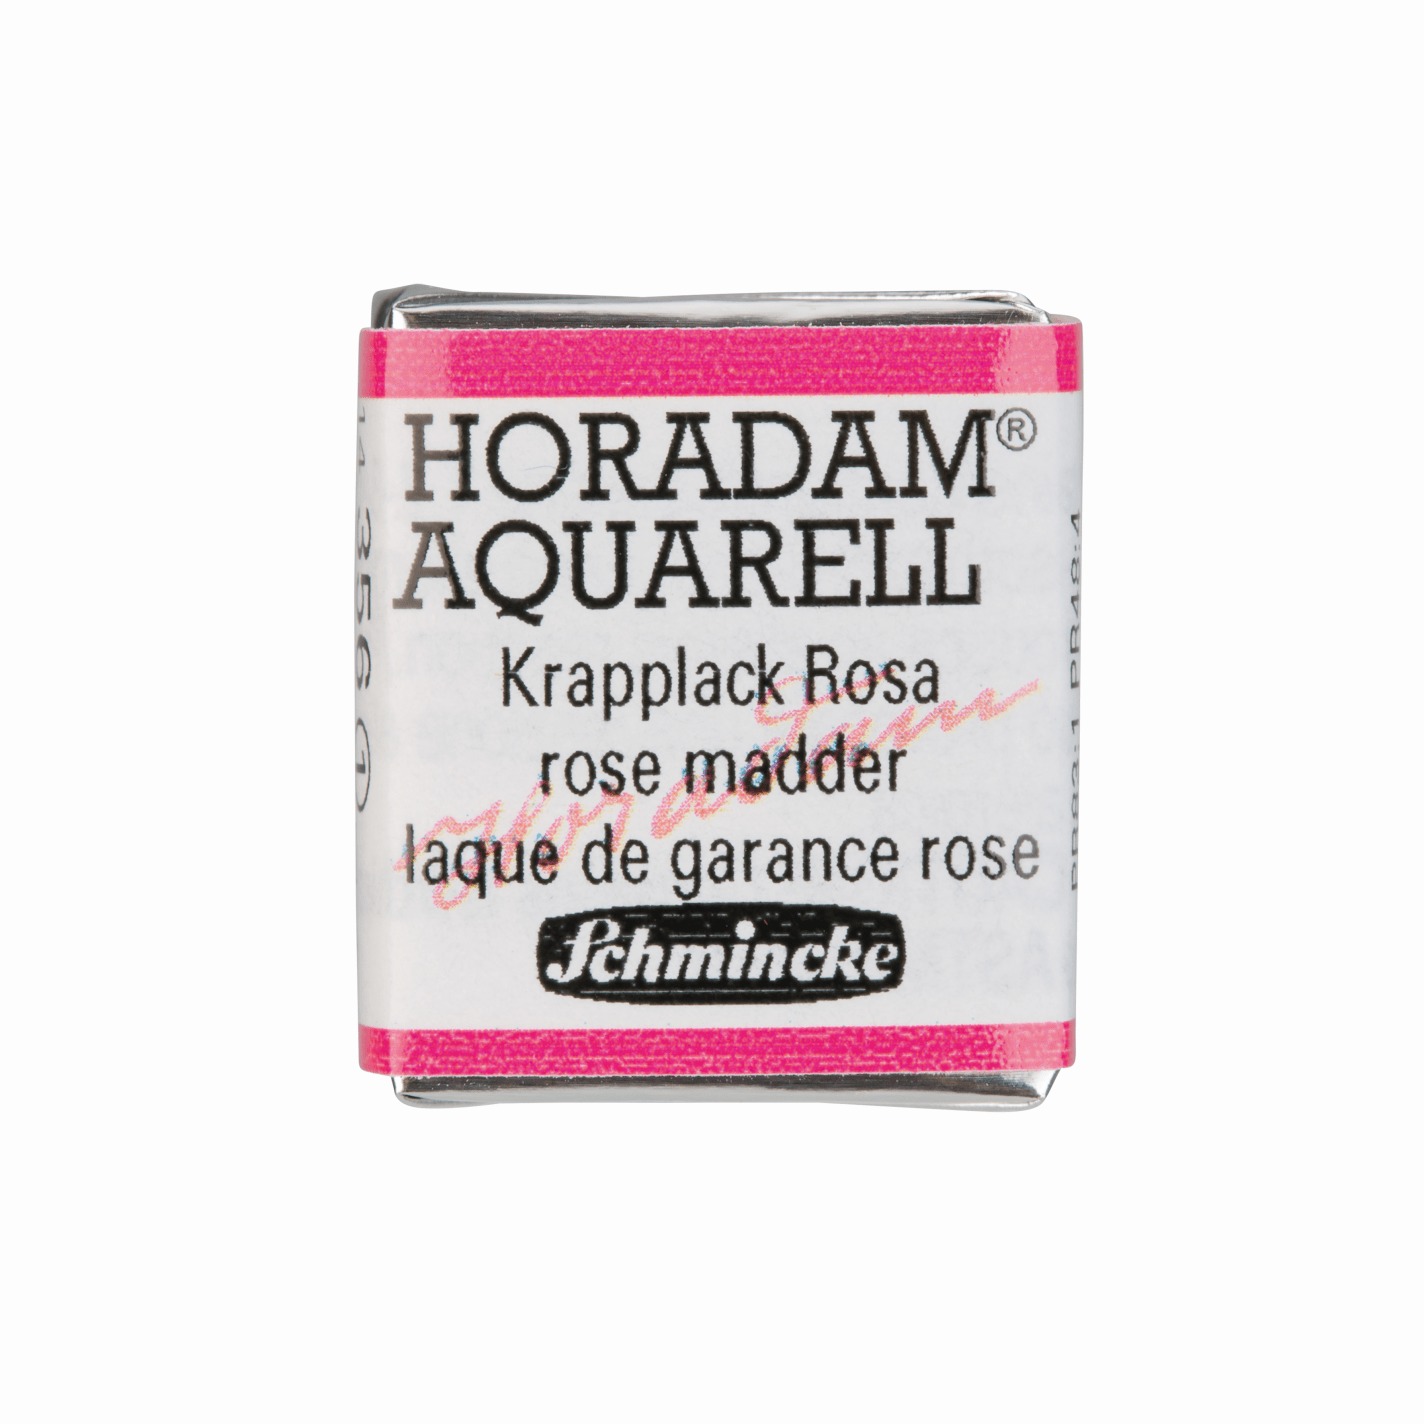 Schmincke Horadam Aquarell pans 1/2 pan Rose Madder